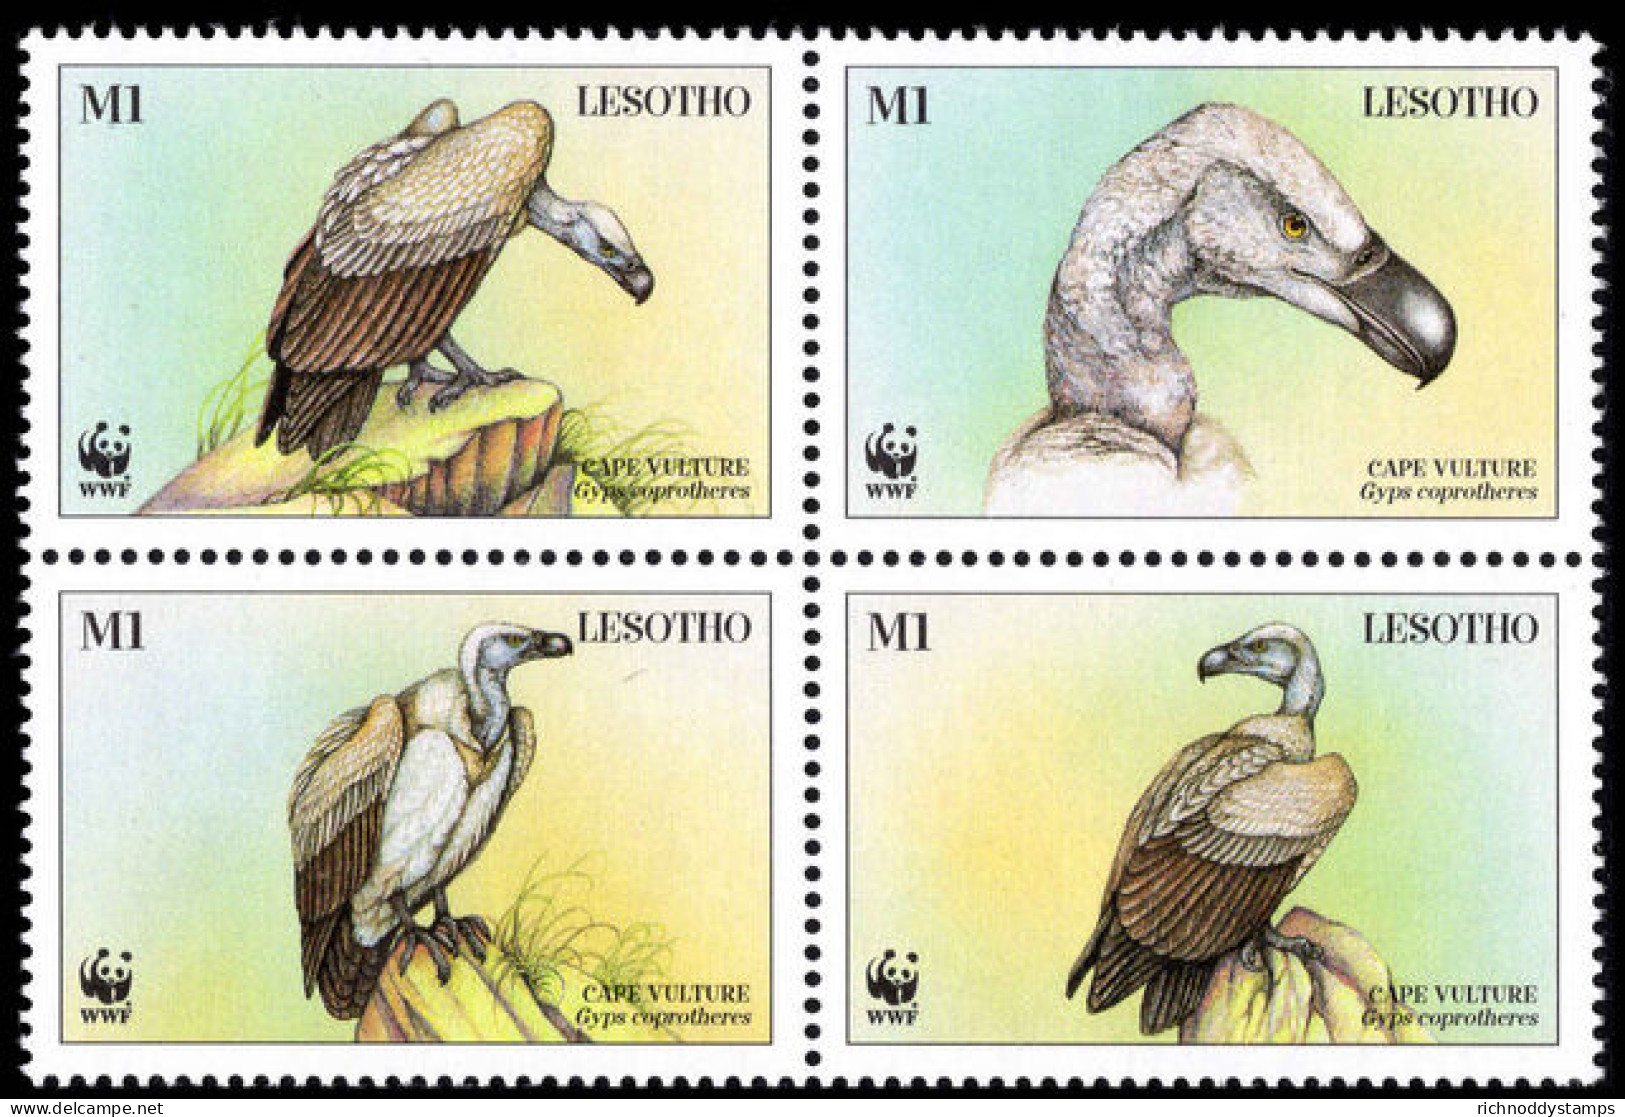 Lesotho 1998 Endangered Species. Cape Vulture BLOCK OF 4 Unmounted Mint. - Lesotho (1966-...)